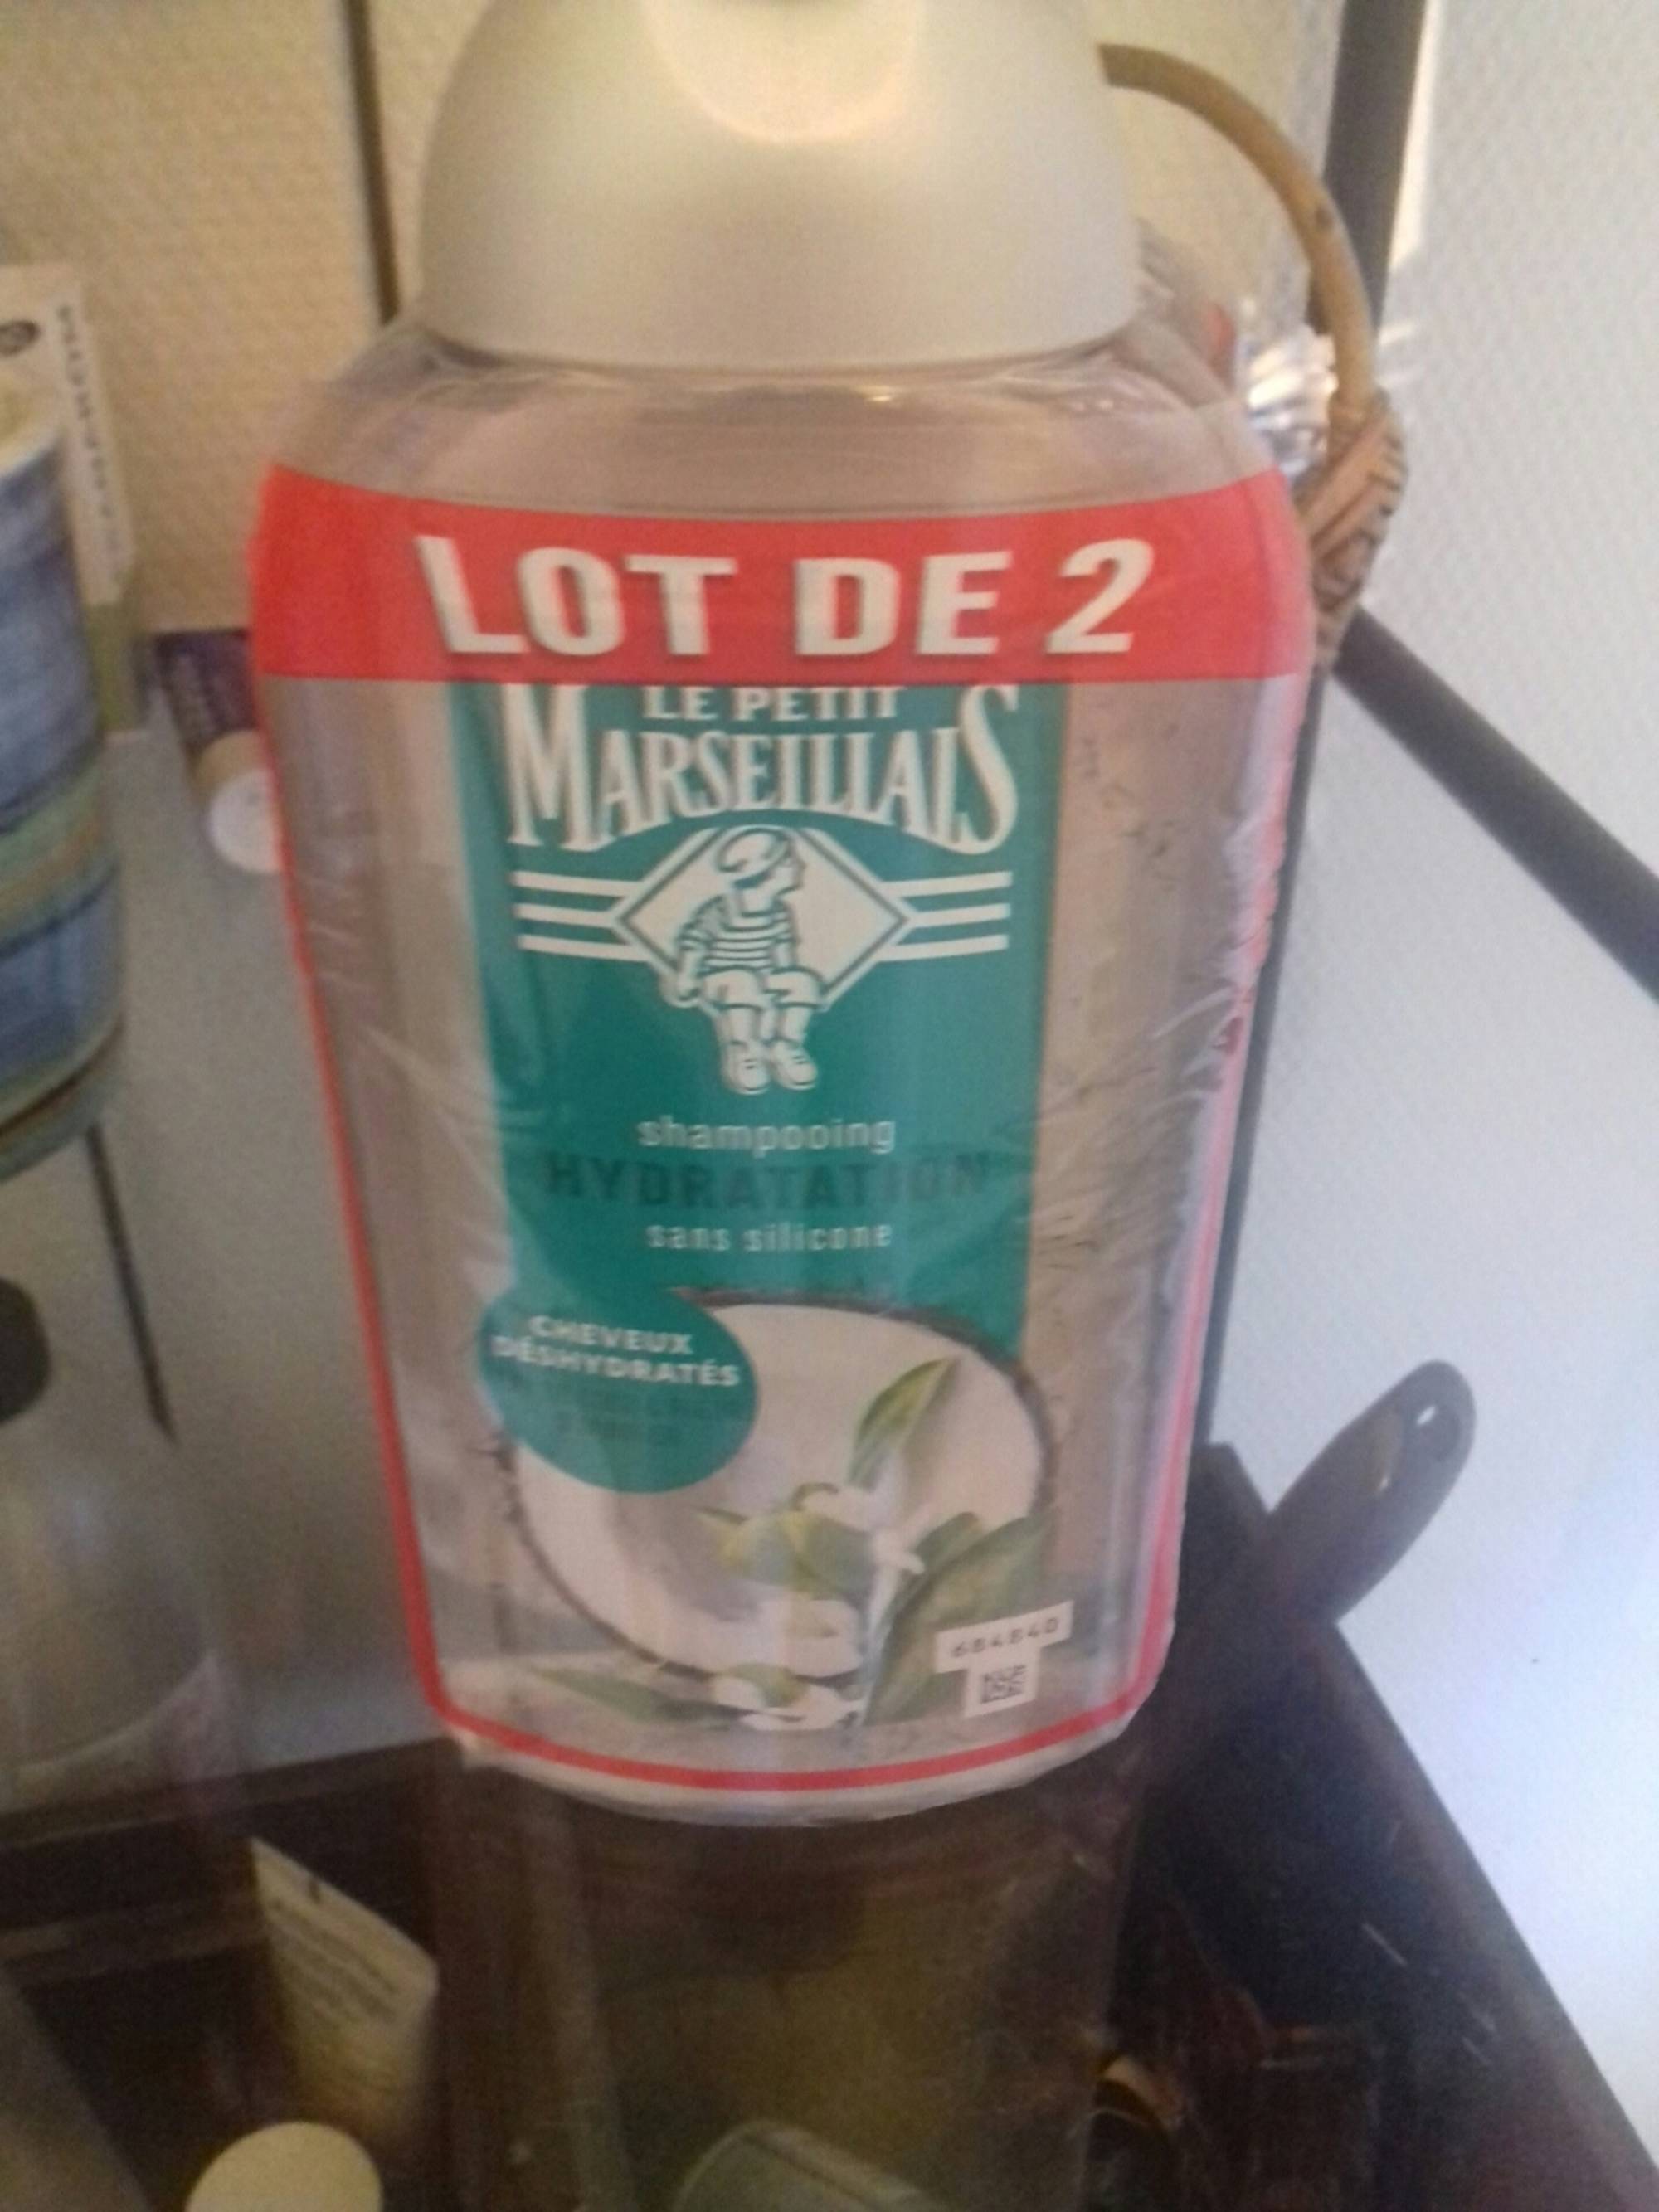 LE PETIT MARSEILLAIS - Shampooing hydratation